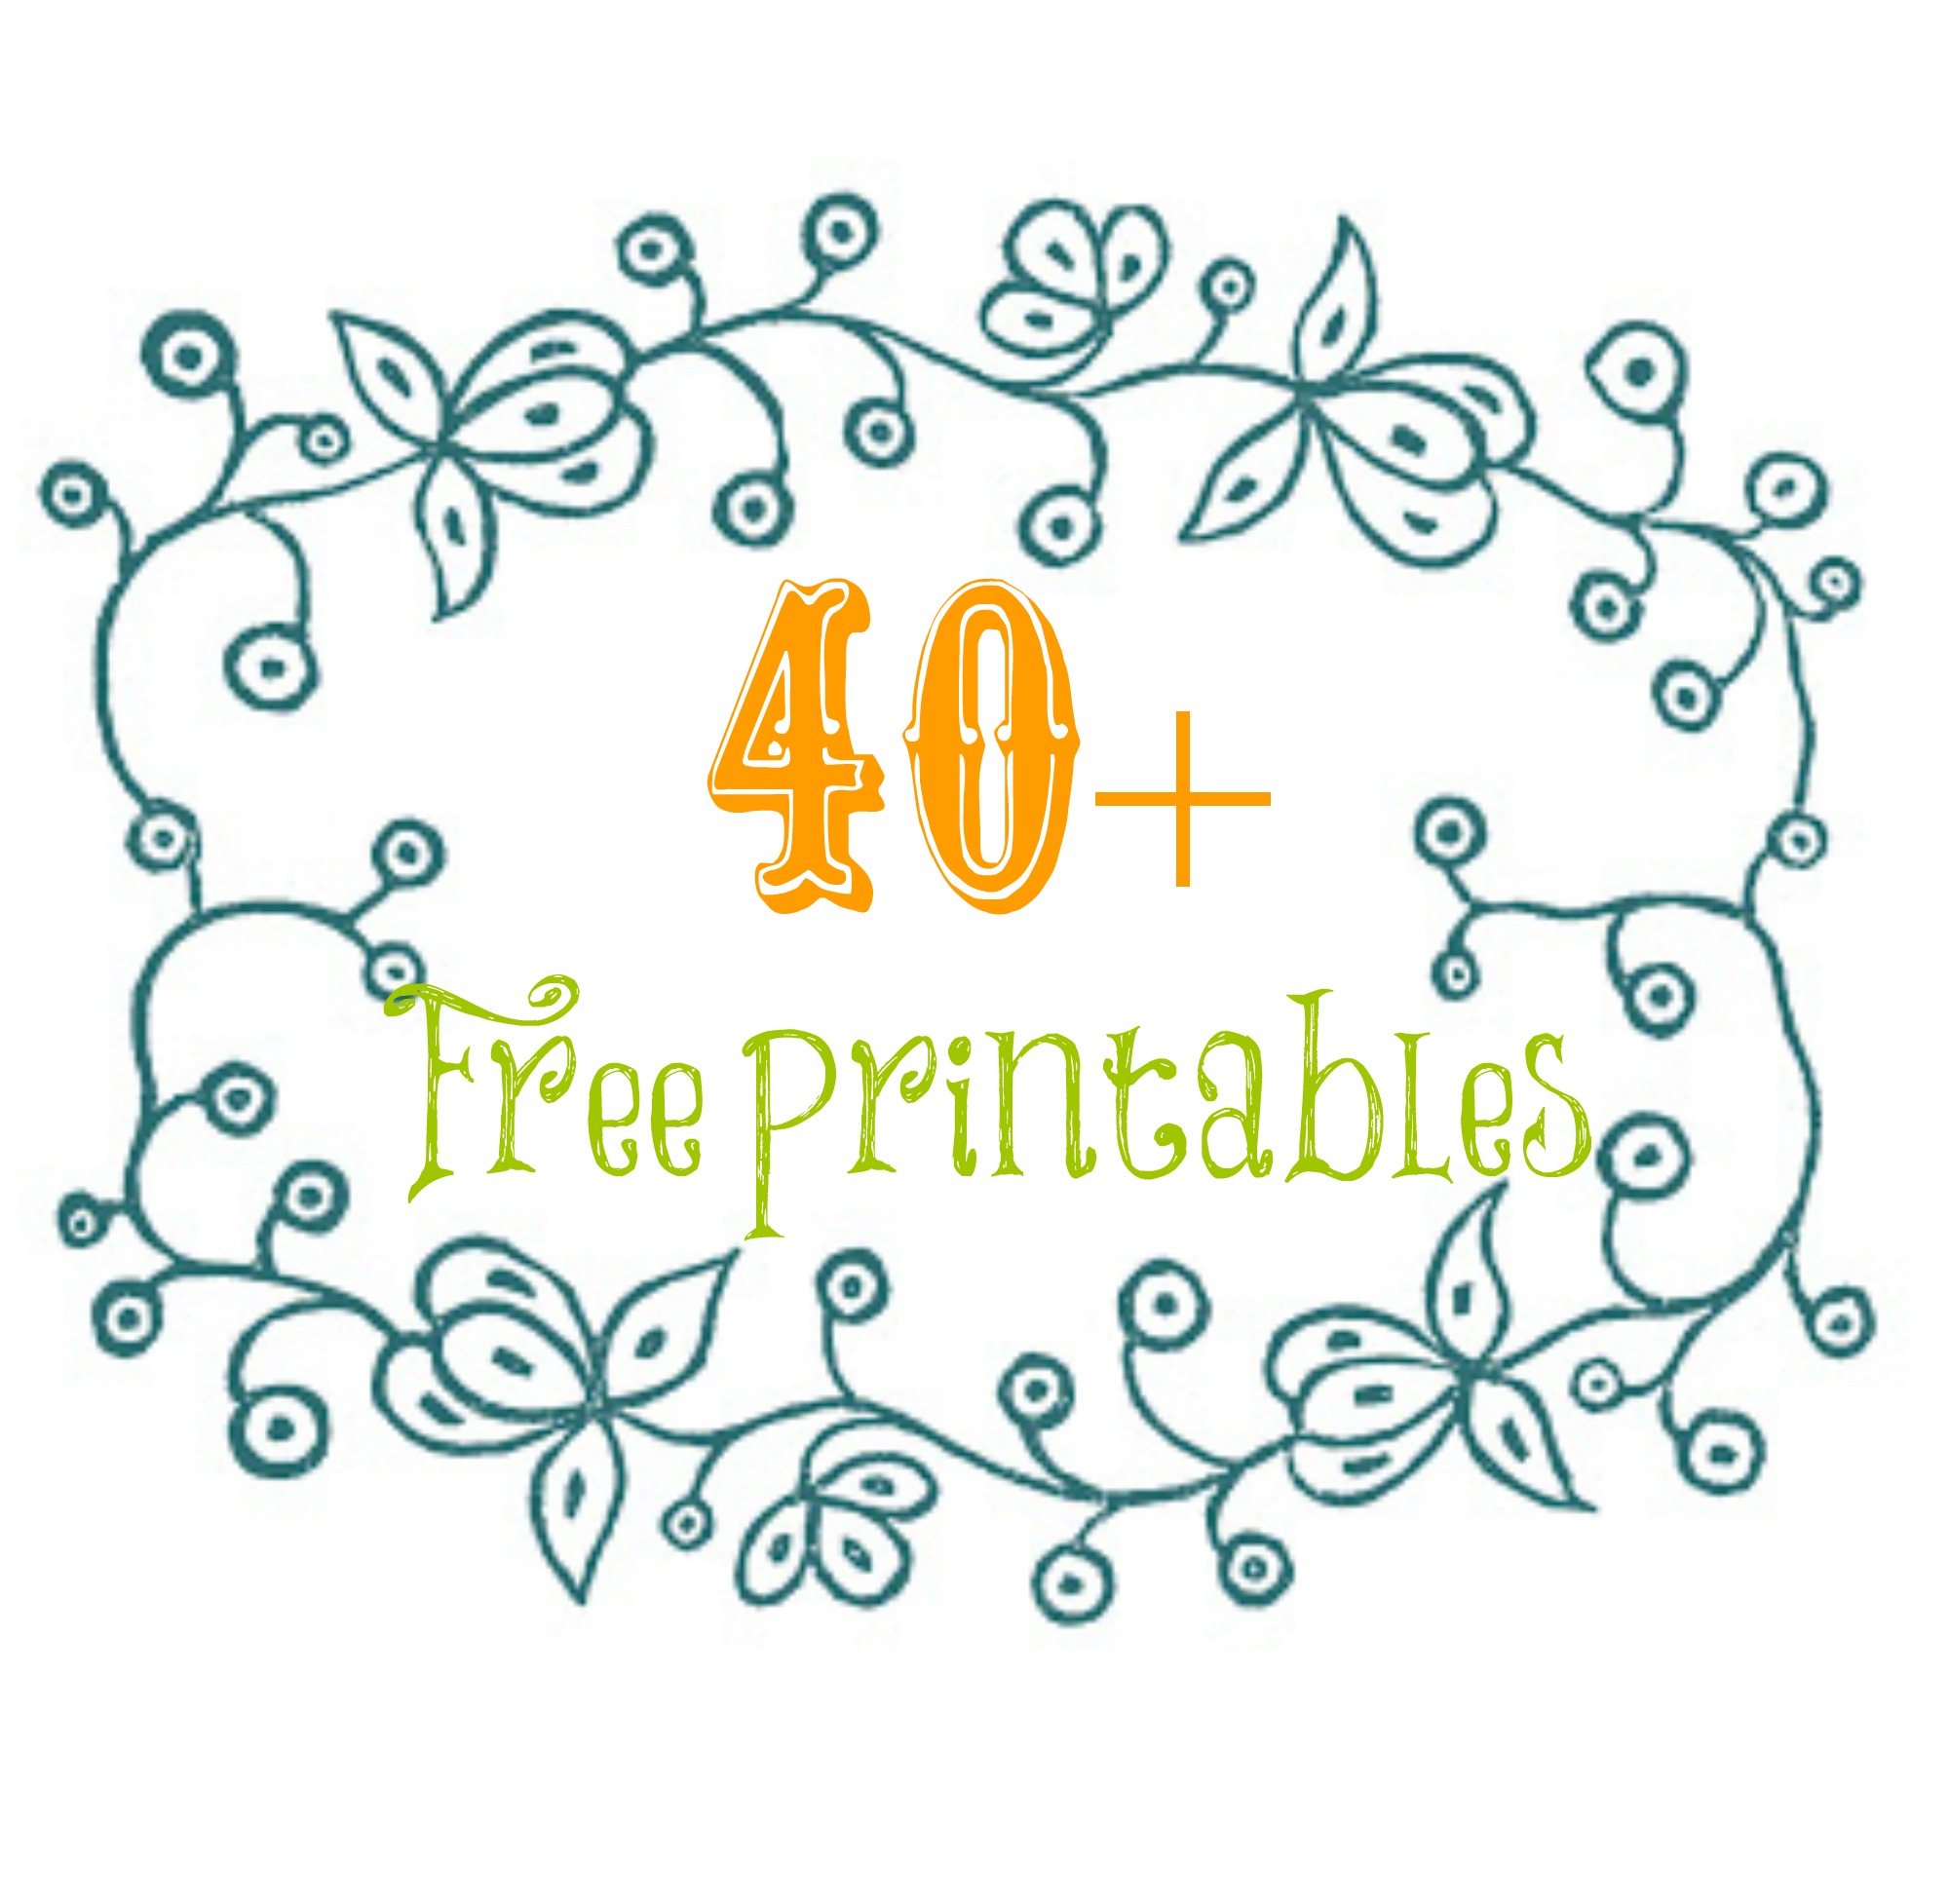 40 + Free Printables